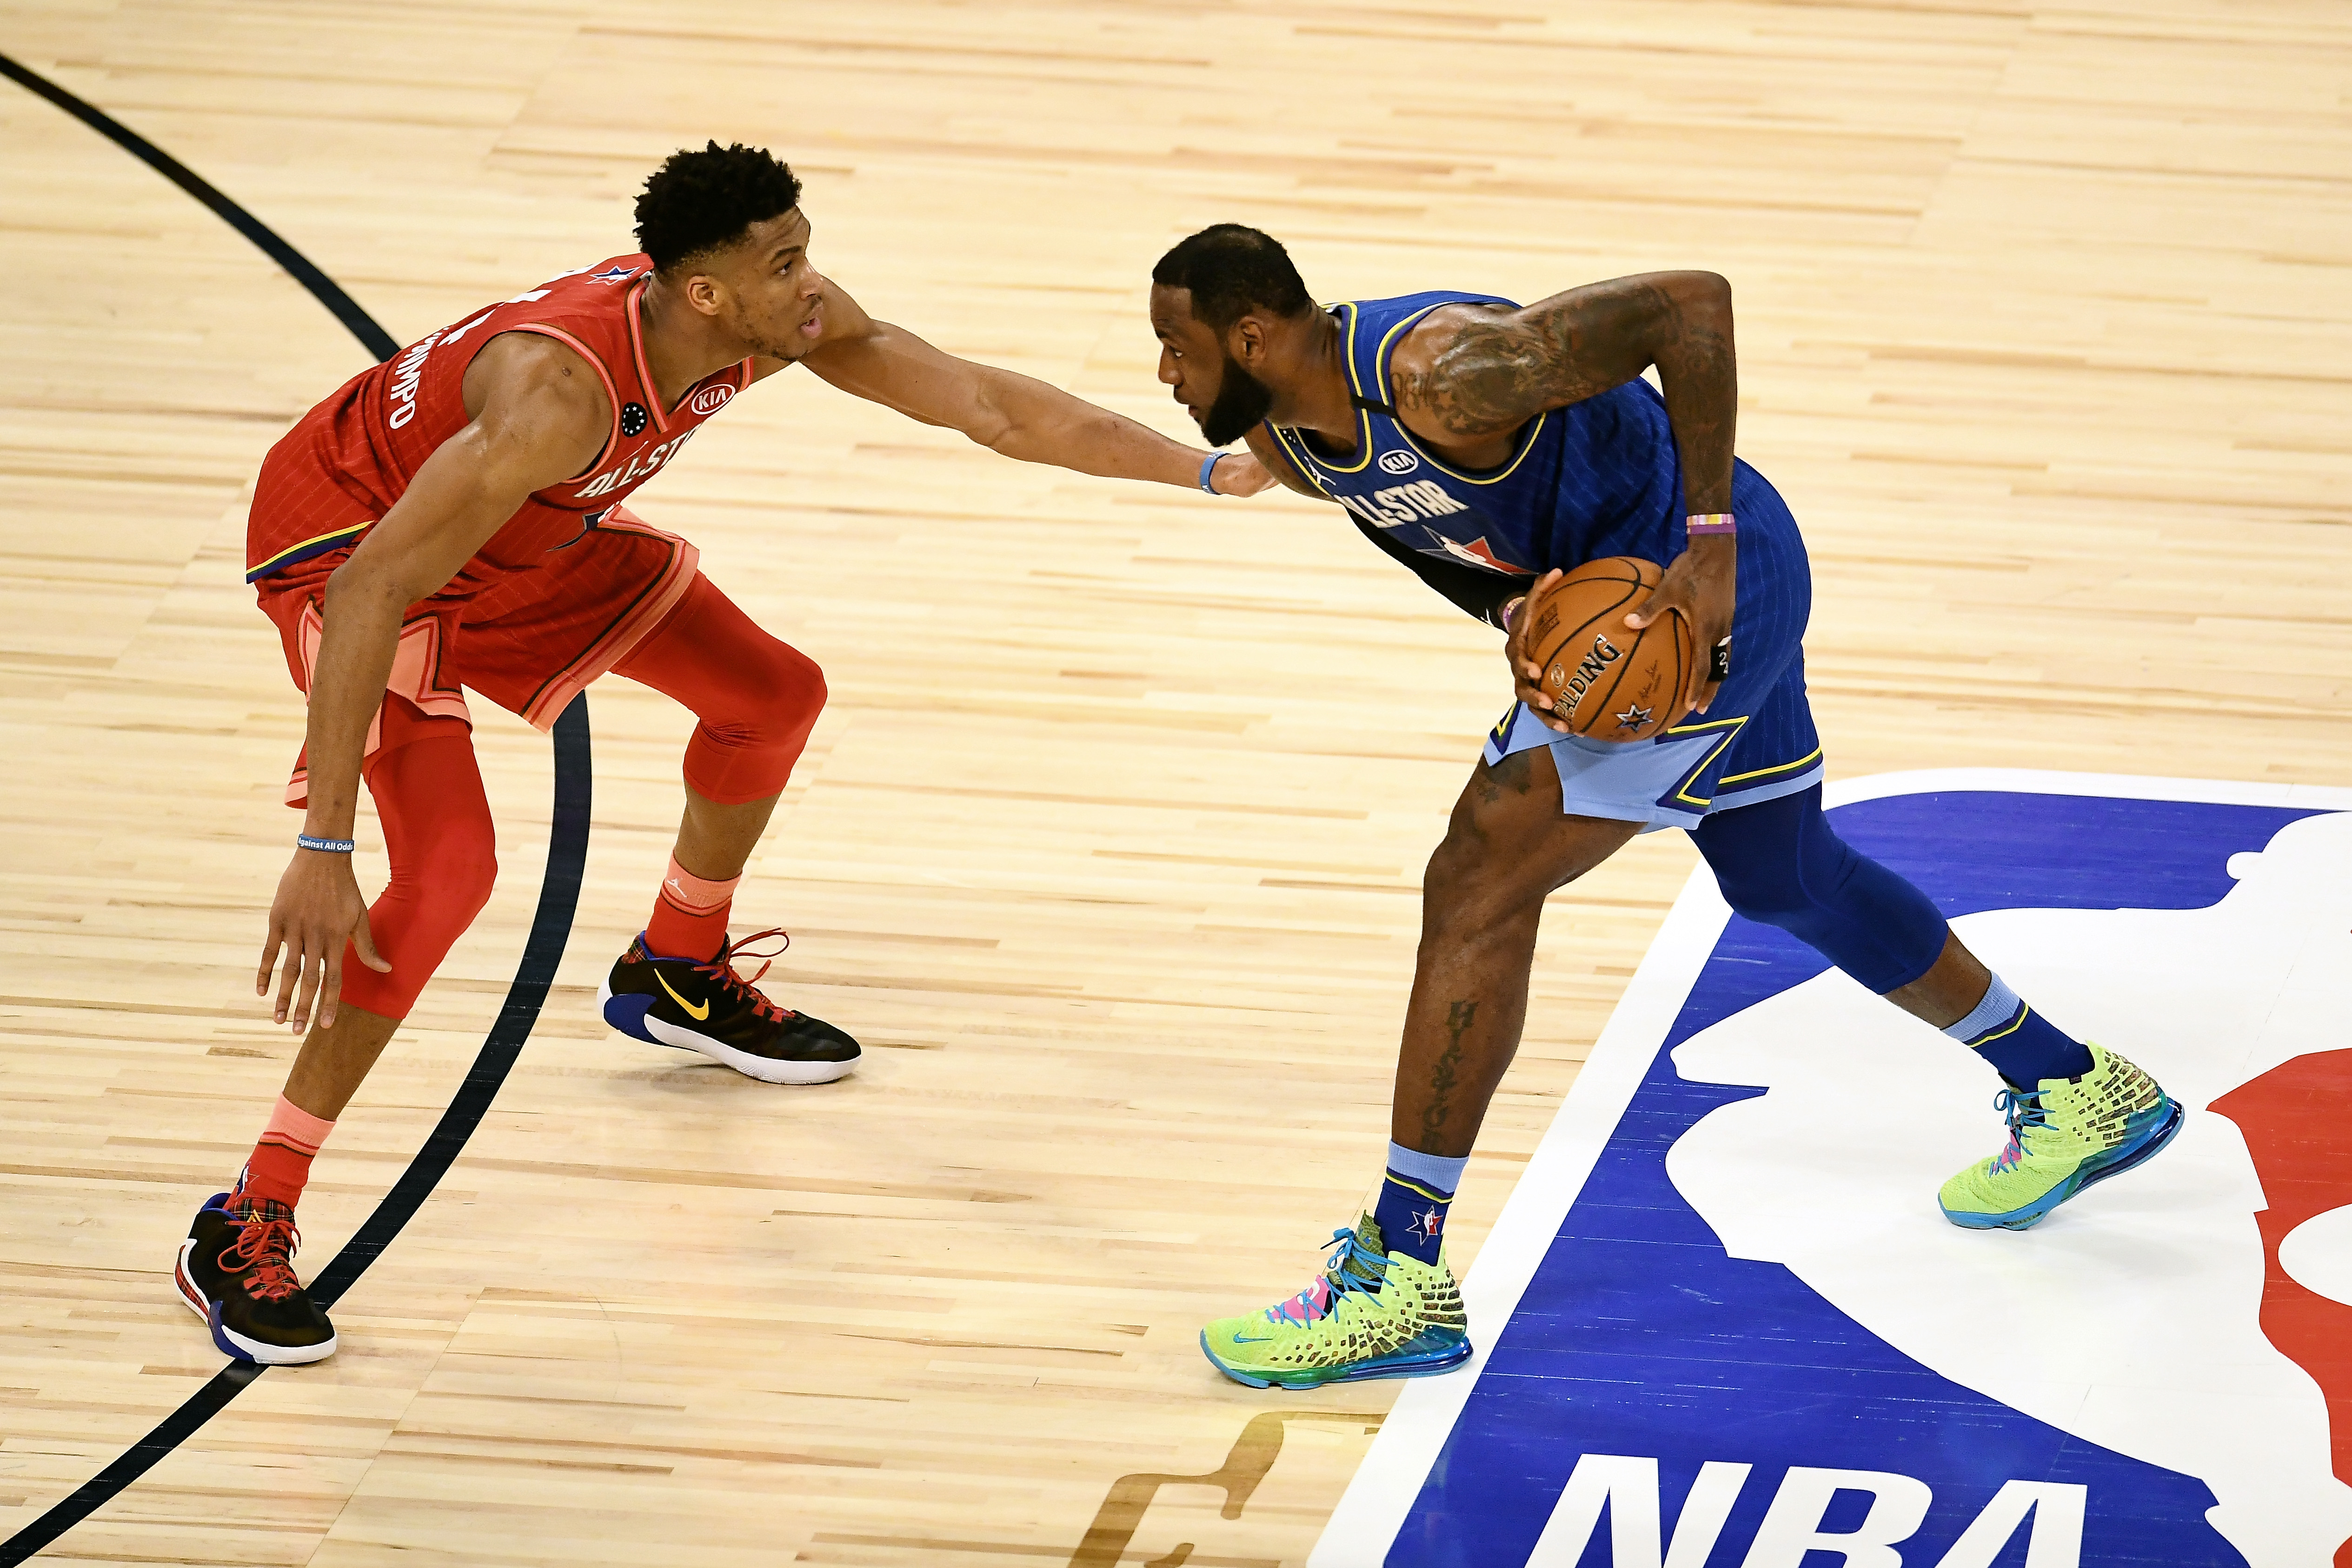 NBA All-Star Game: Best photos